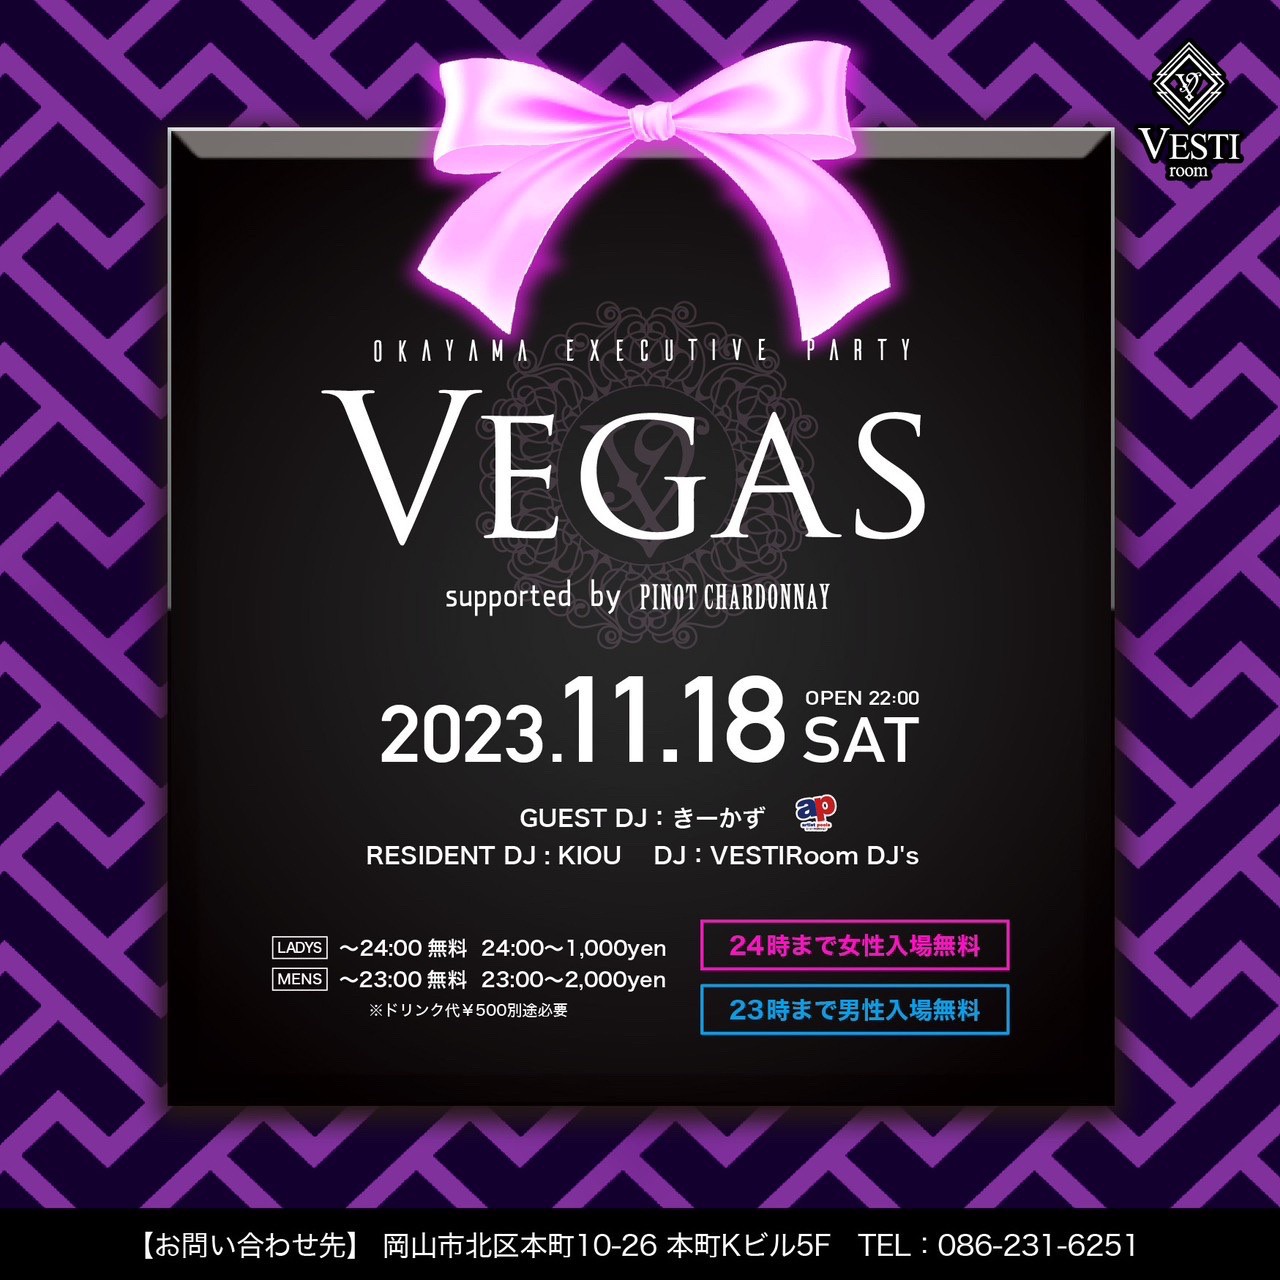 【Vegas】GUEST DJ : きーかず